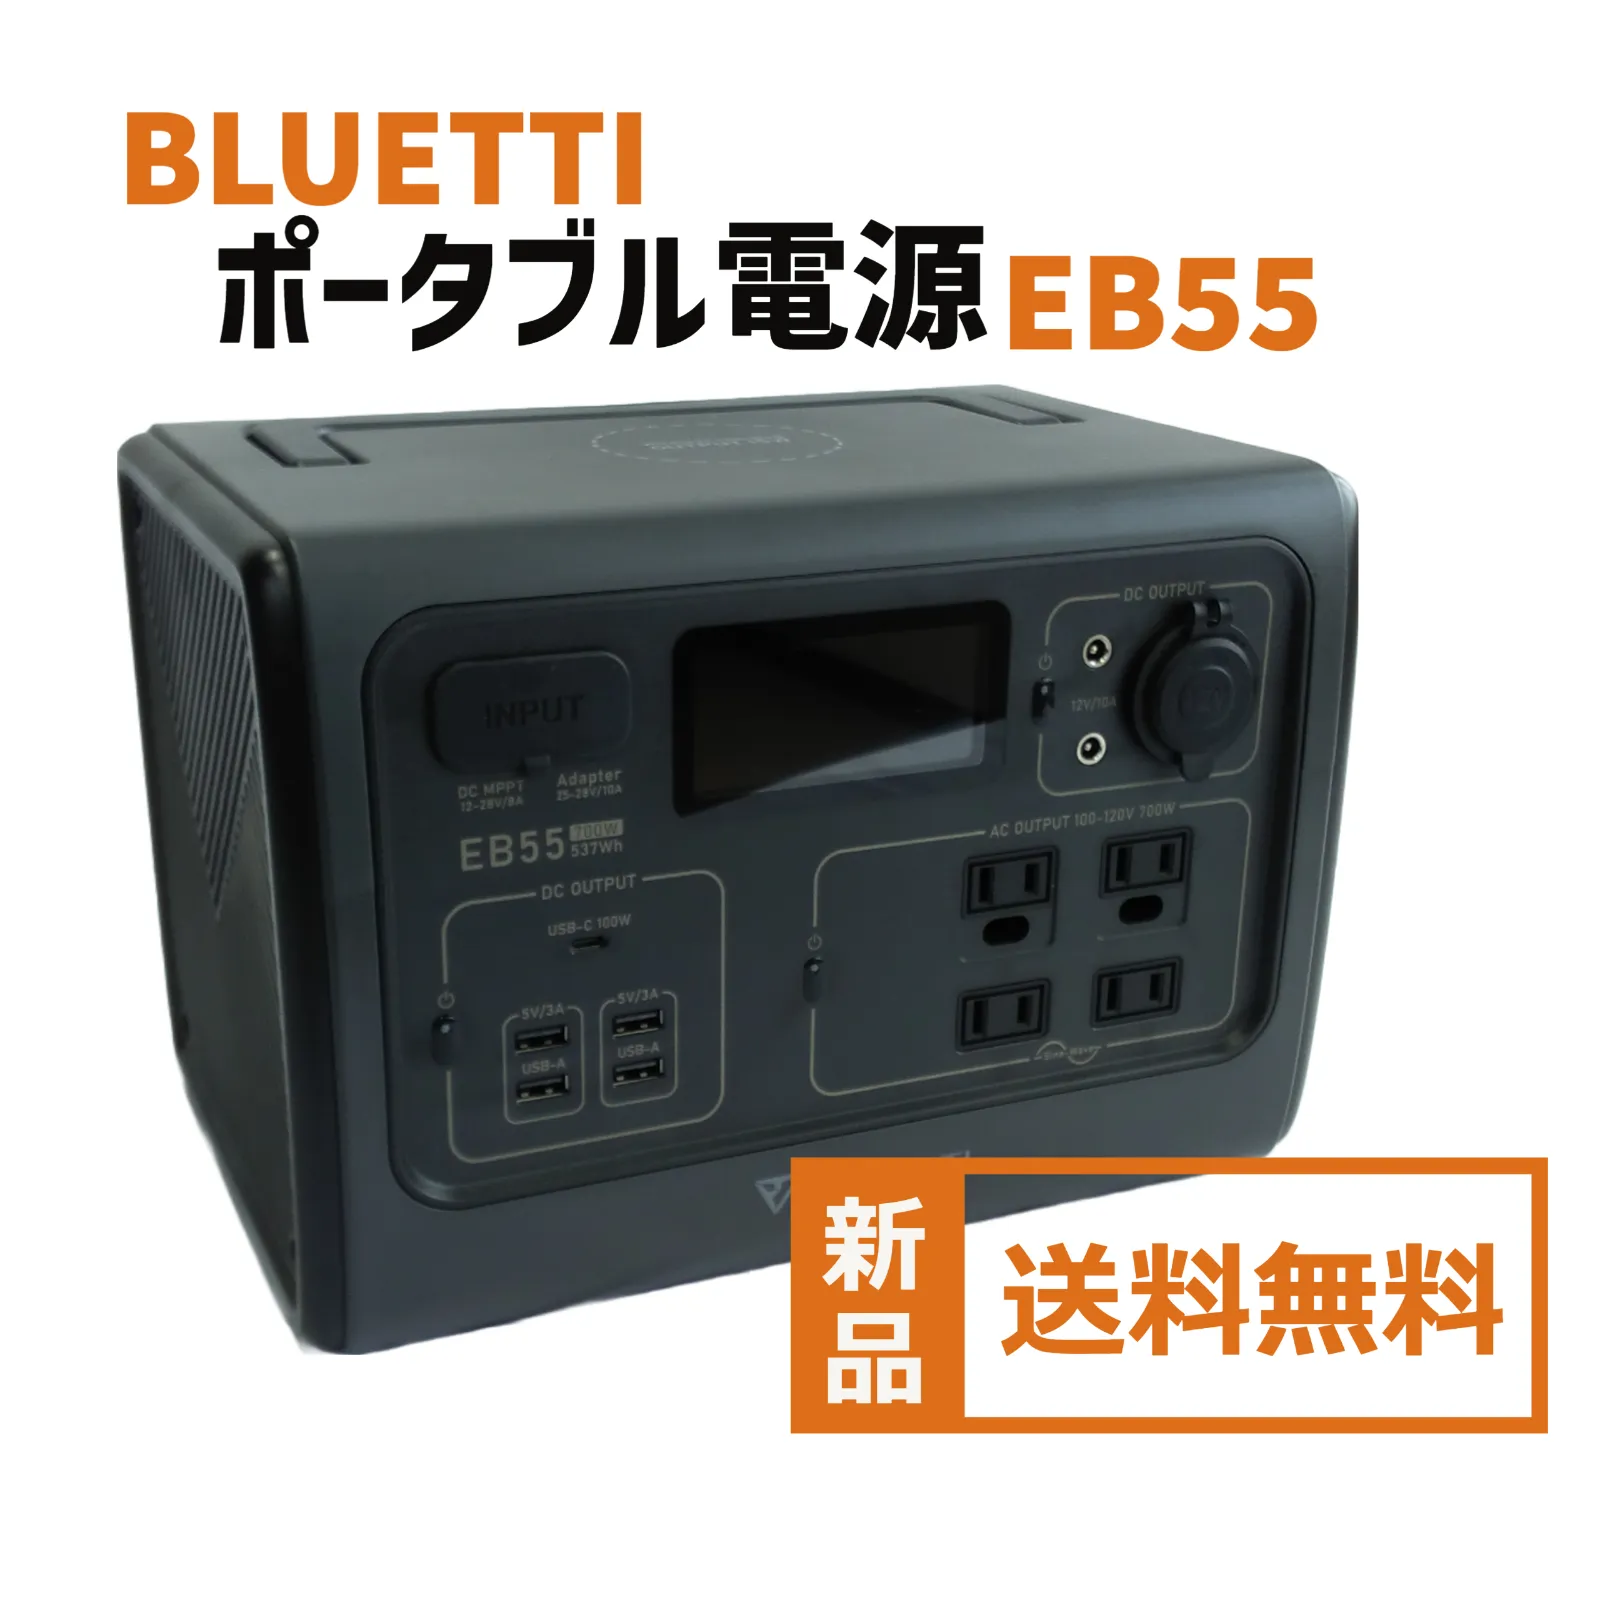 BLUETTI ポータブル電源 EB55 グレー 新品 アウトドア用品 防災-